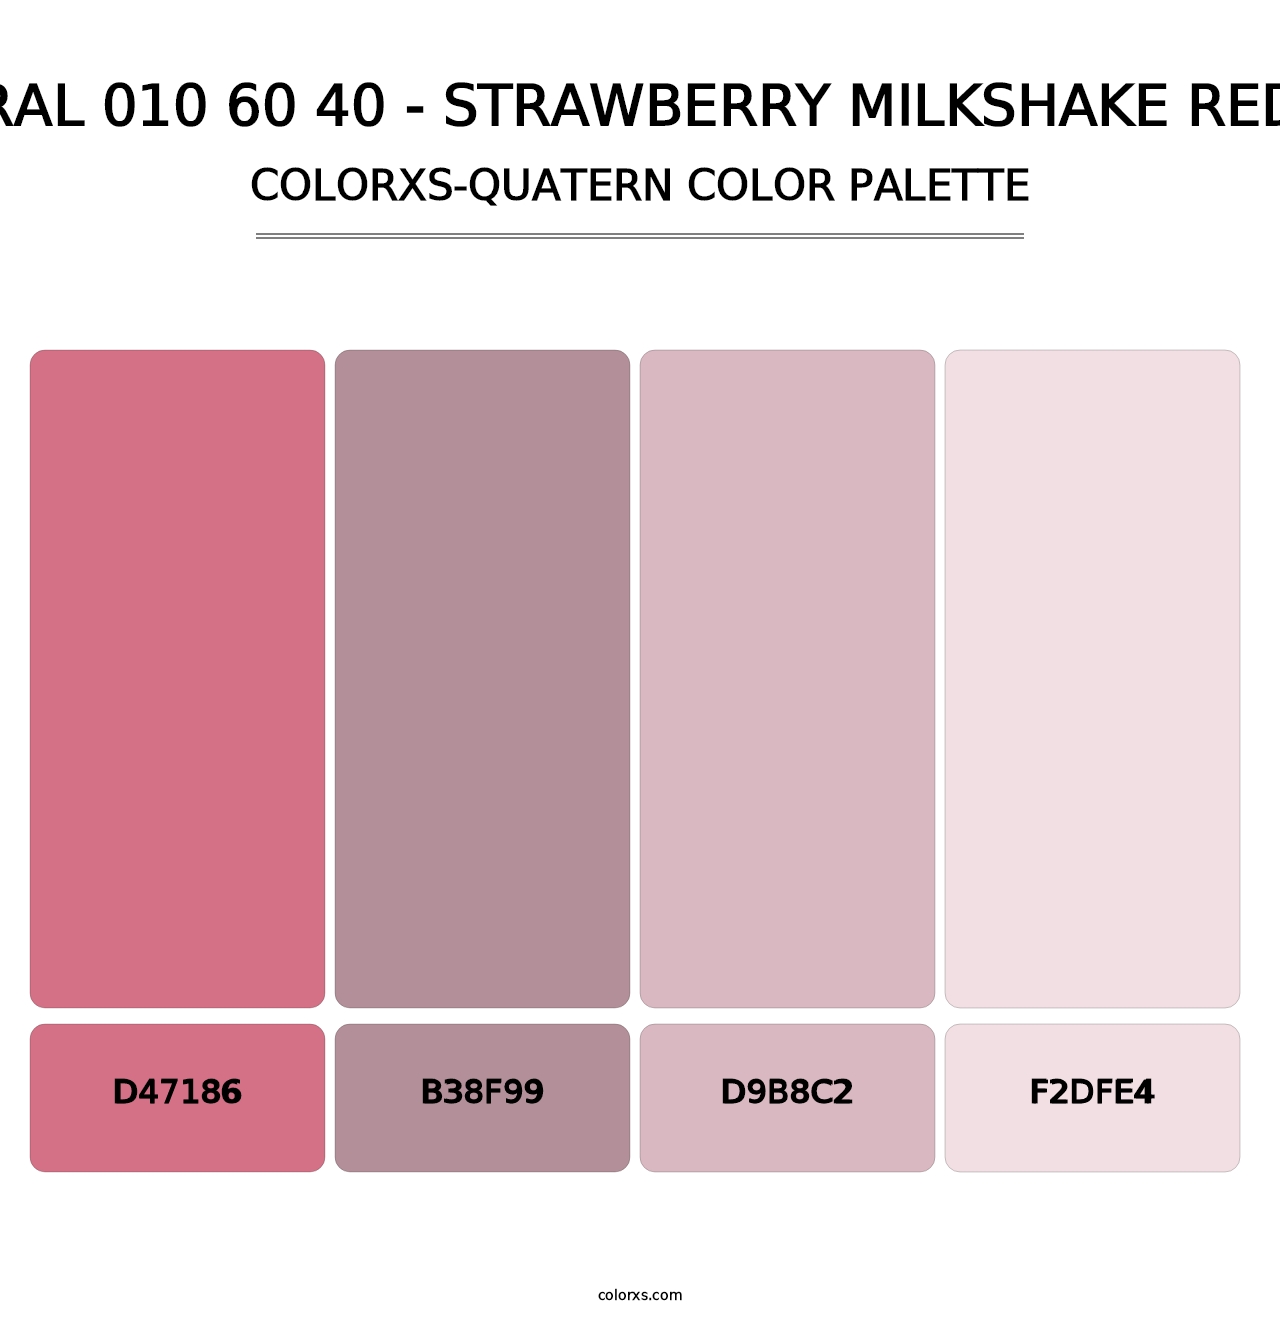 RAL 010 60 40 - Strawberry Milkshake Red - Colorxs Quatern Palette